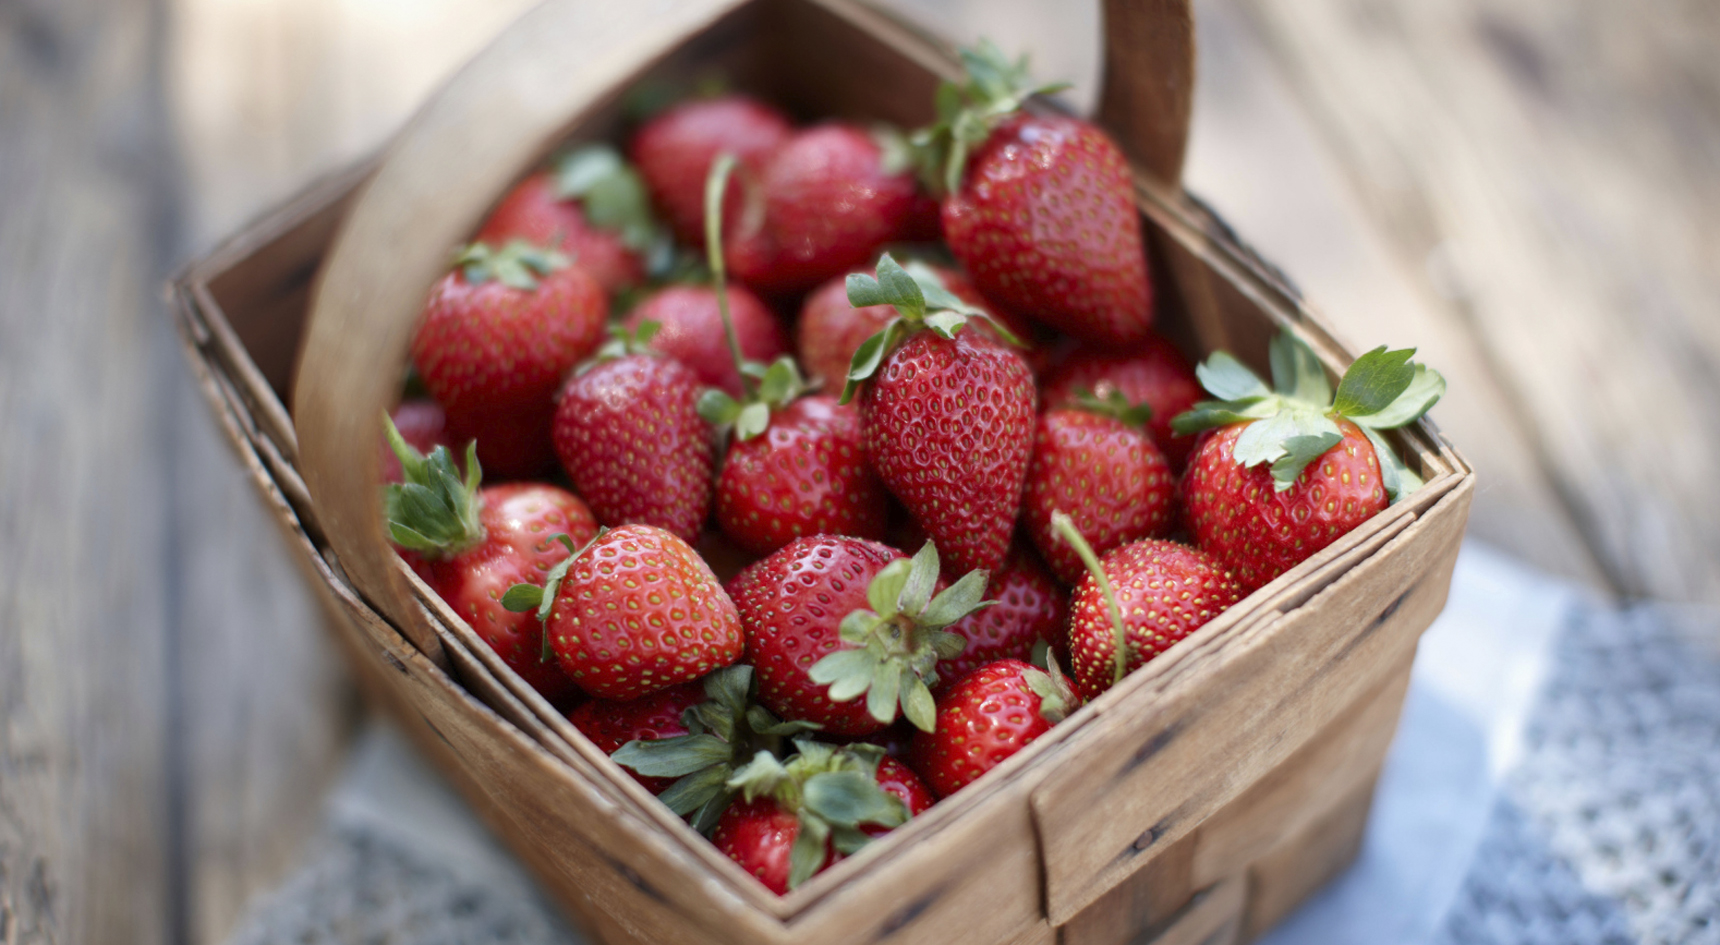 A basket full of juicy red strawberries.